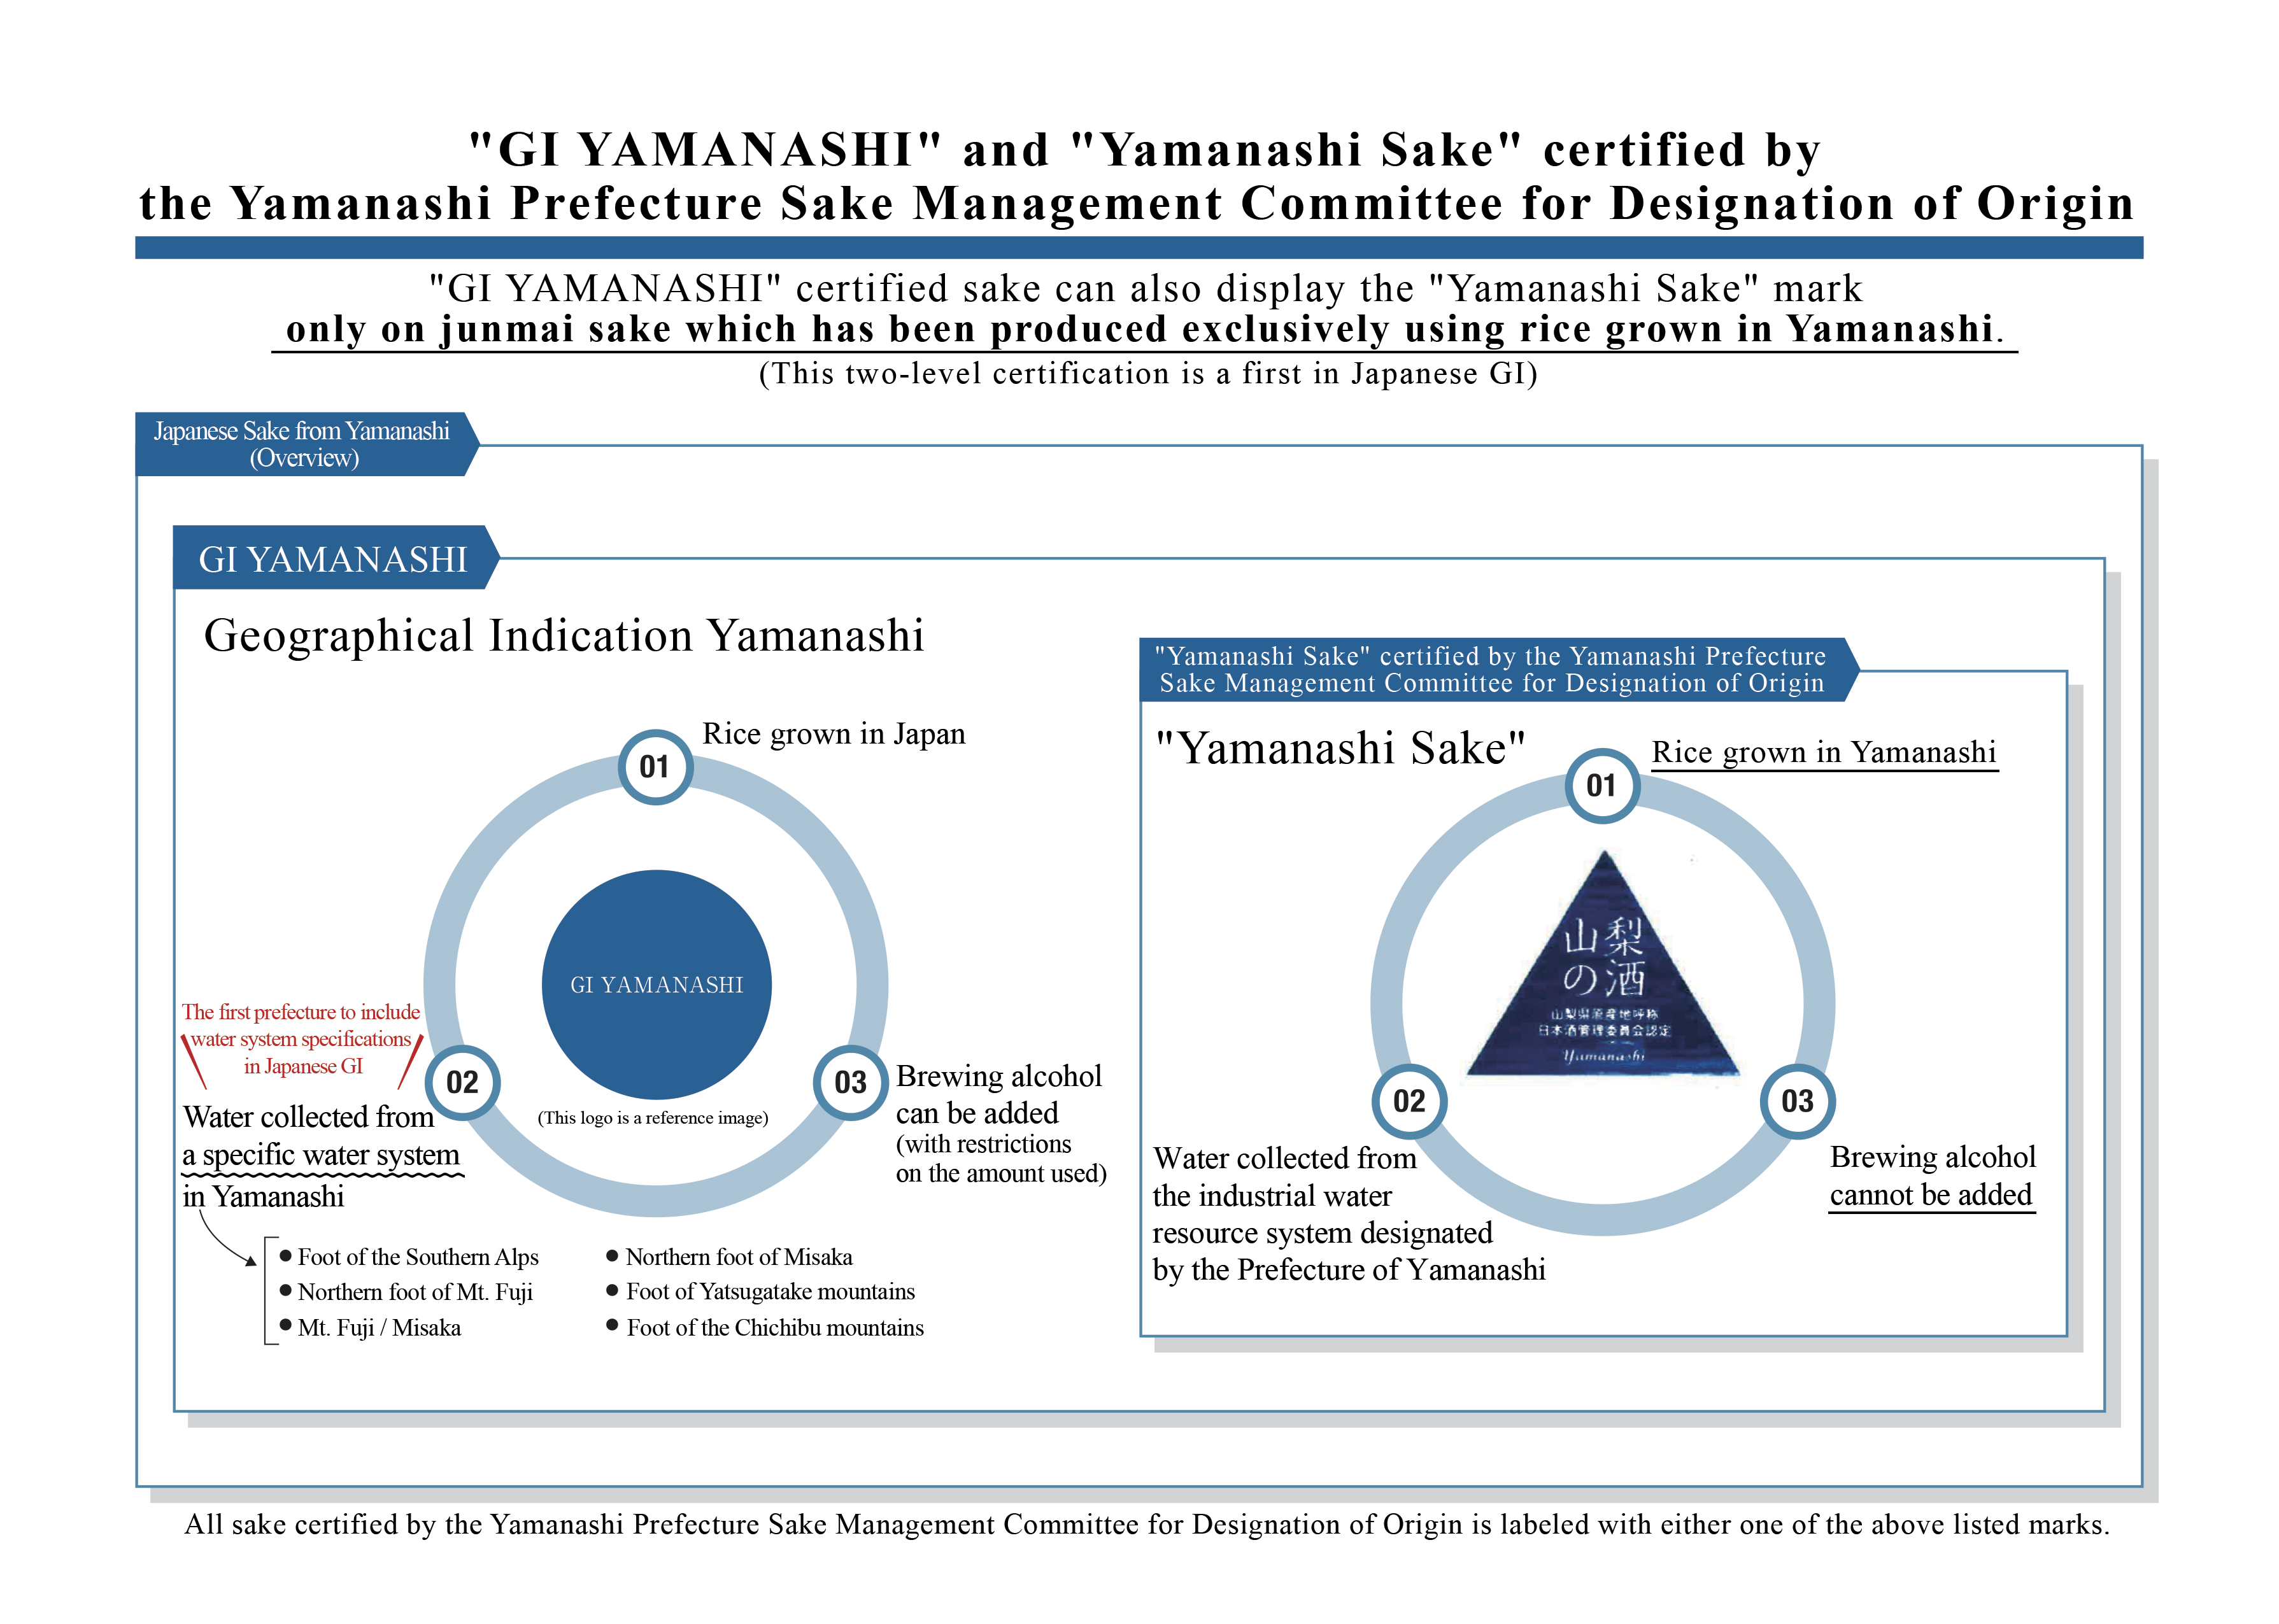  'GI YAMANASHI' and 'Yamanashi Sake' certified by the Yamanashi Prefecture Sake Management Committee for Designation of Origin